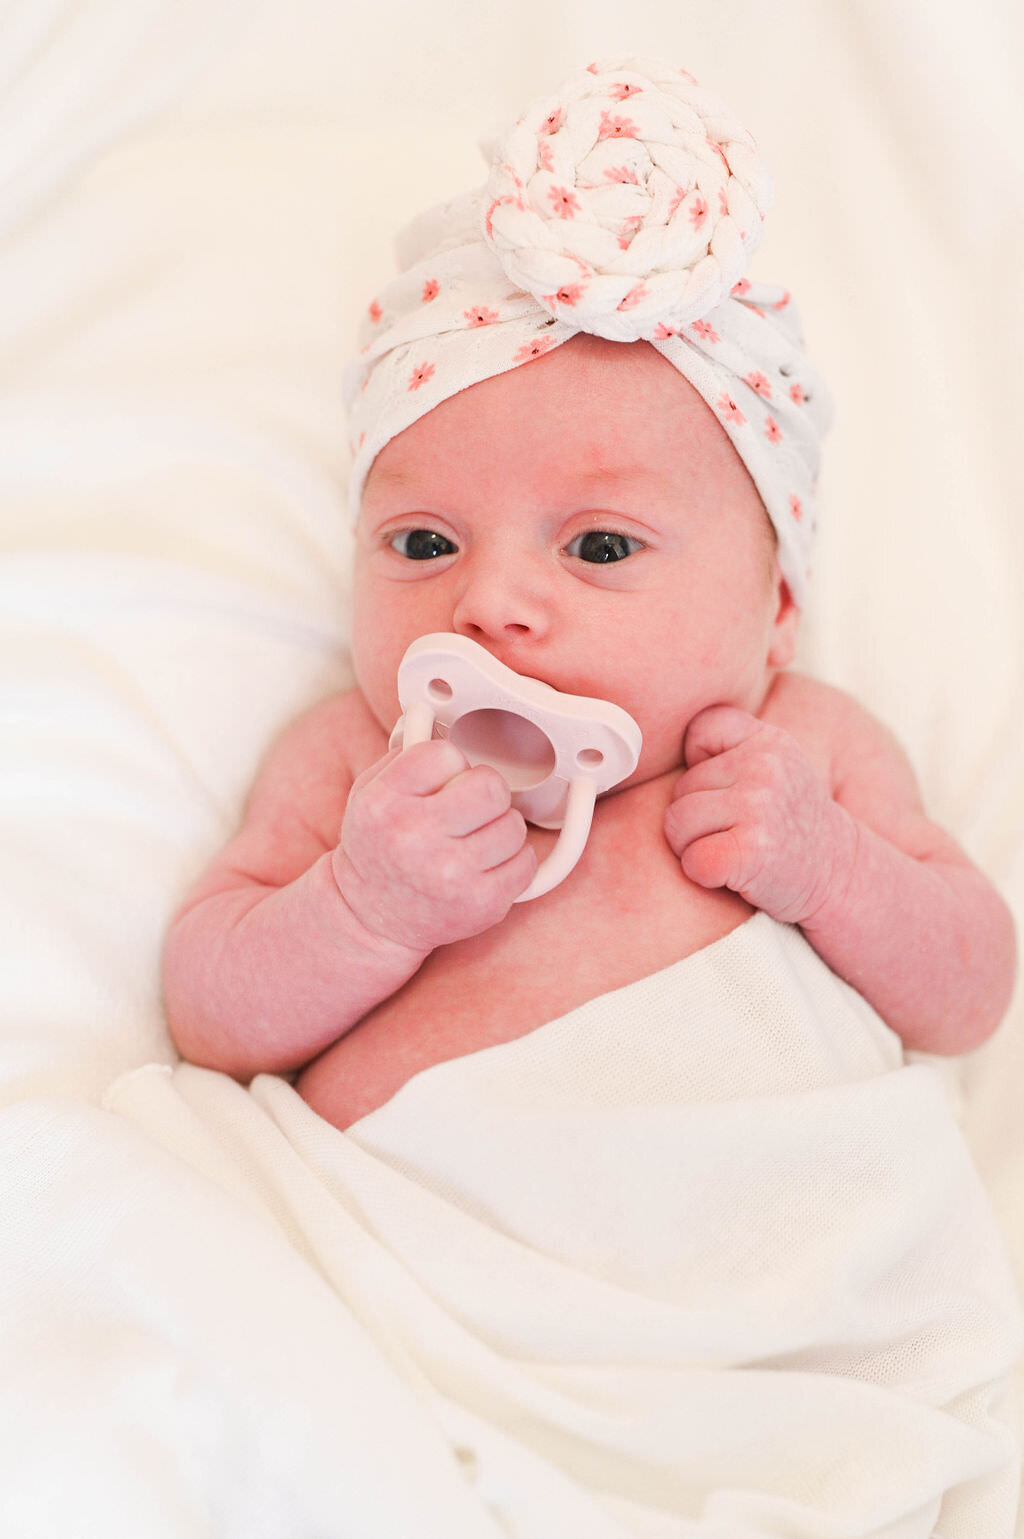 A newborn baby sucking on a pacifier.